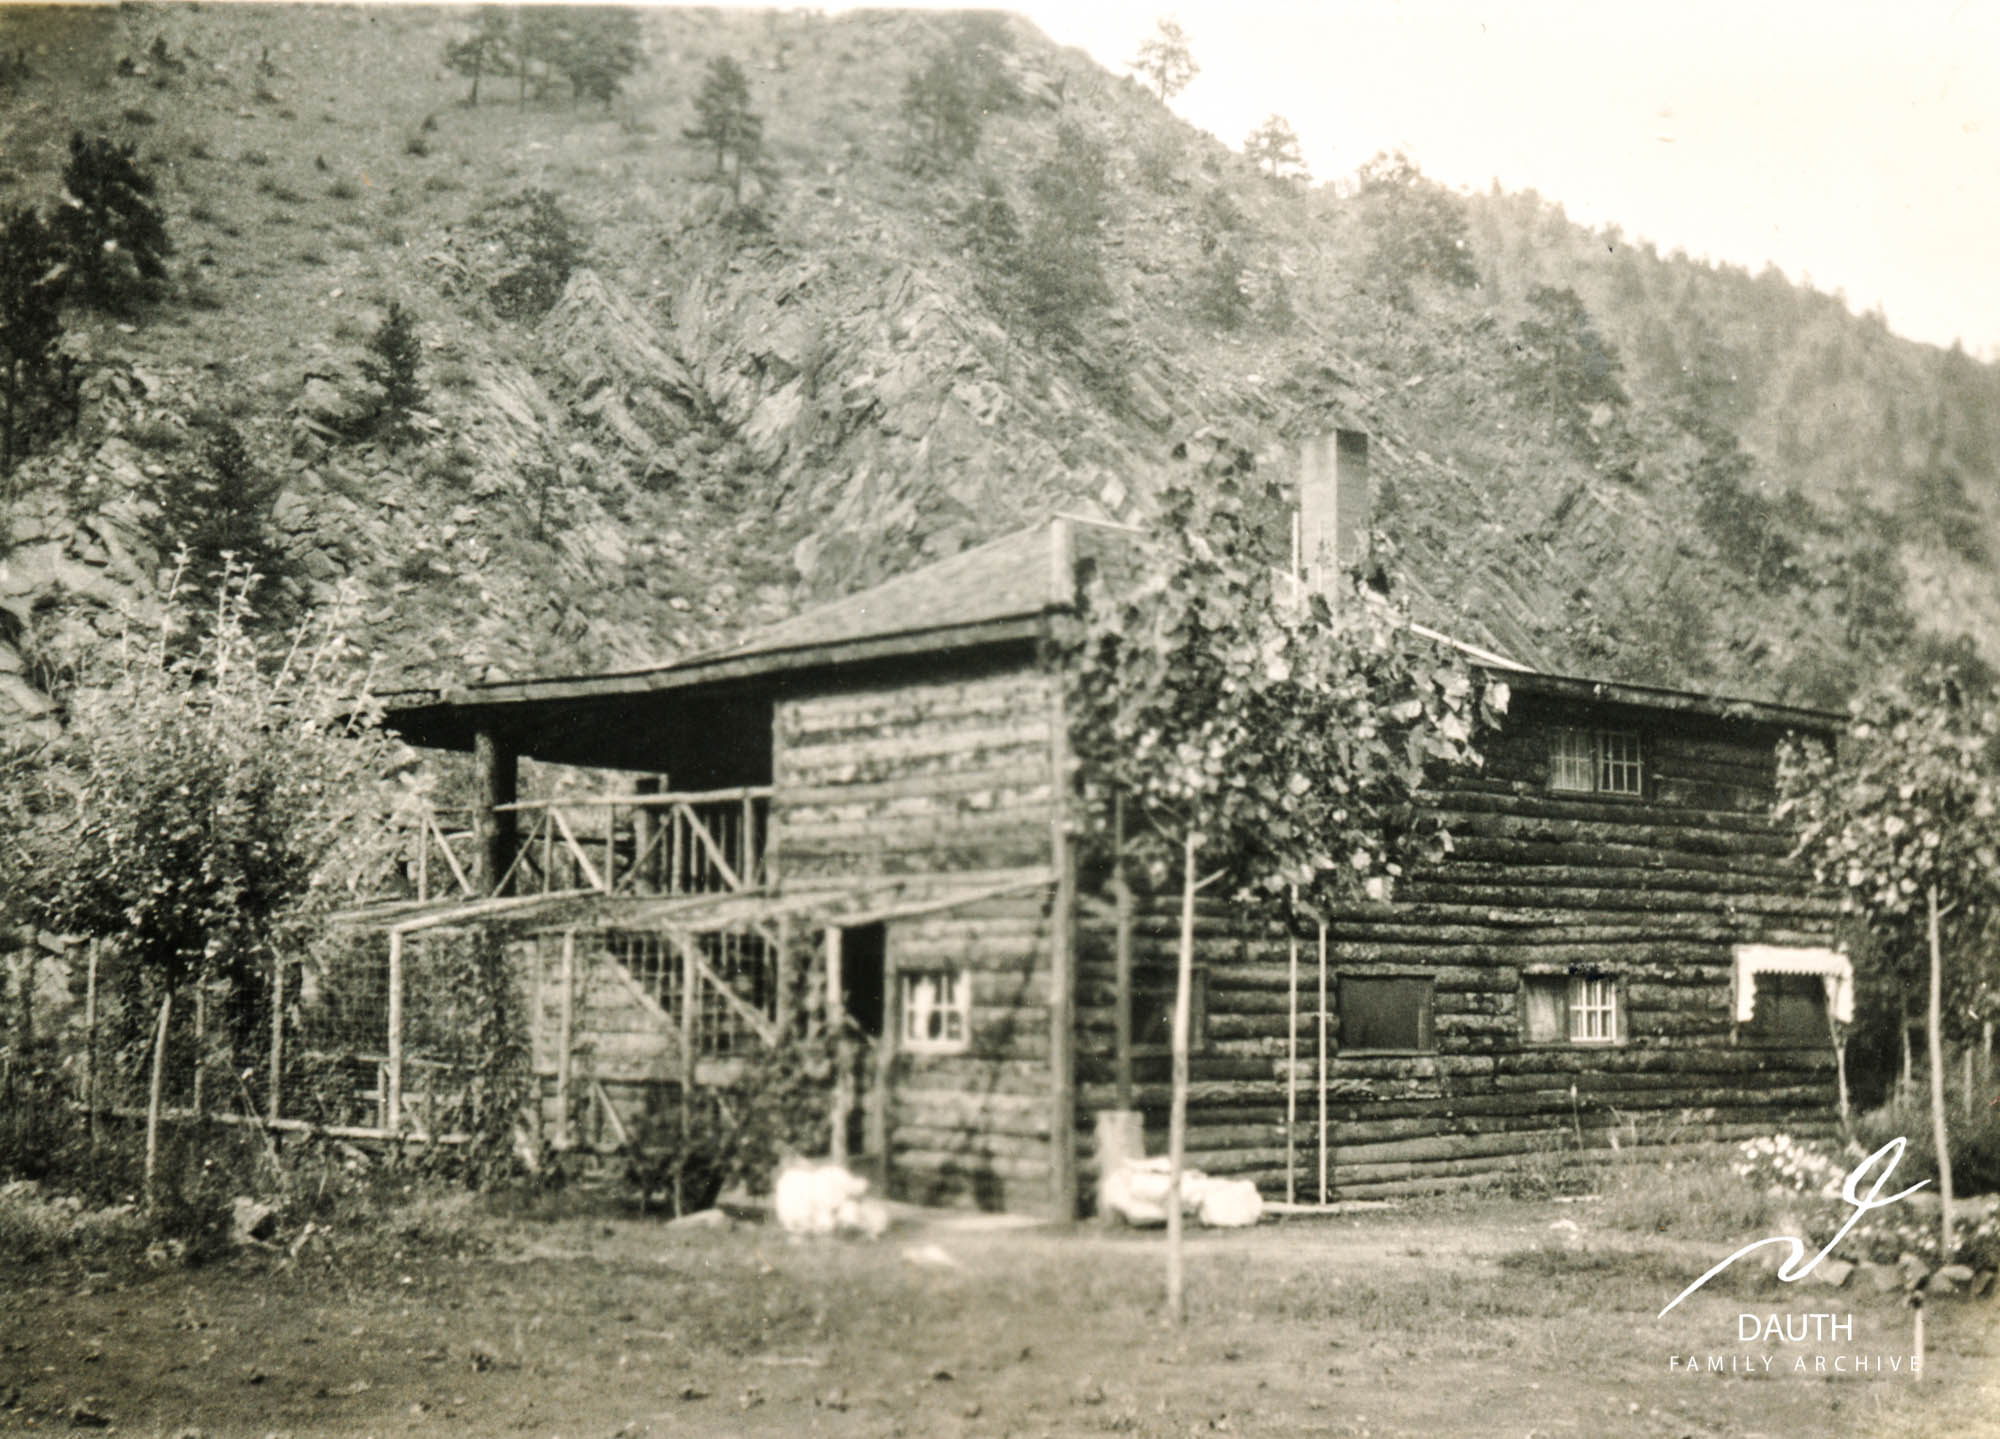 Idlewild Lodge - idlewildlodge.github.io - Circa 1925 - Idlewild Lodge - Looking North East at the New Trellis